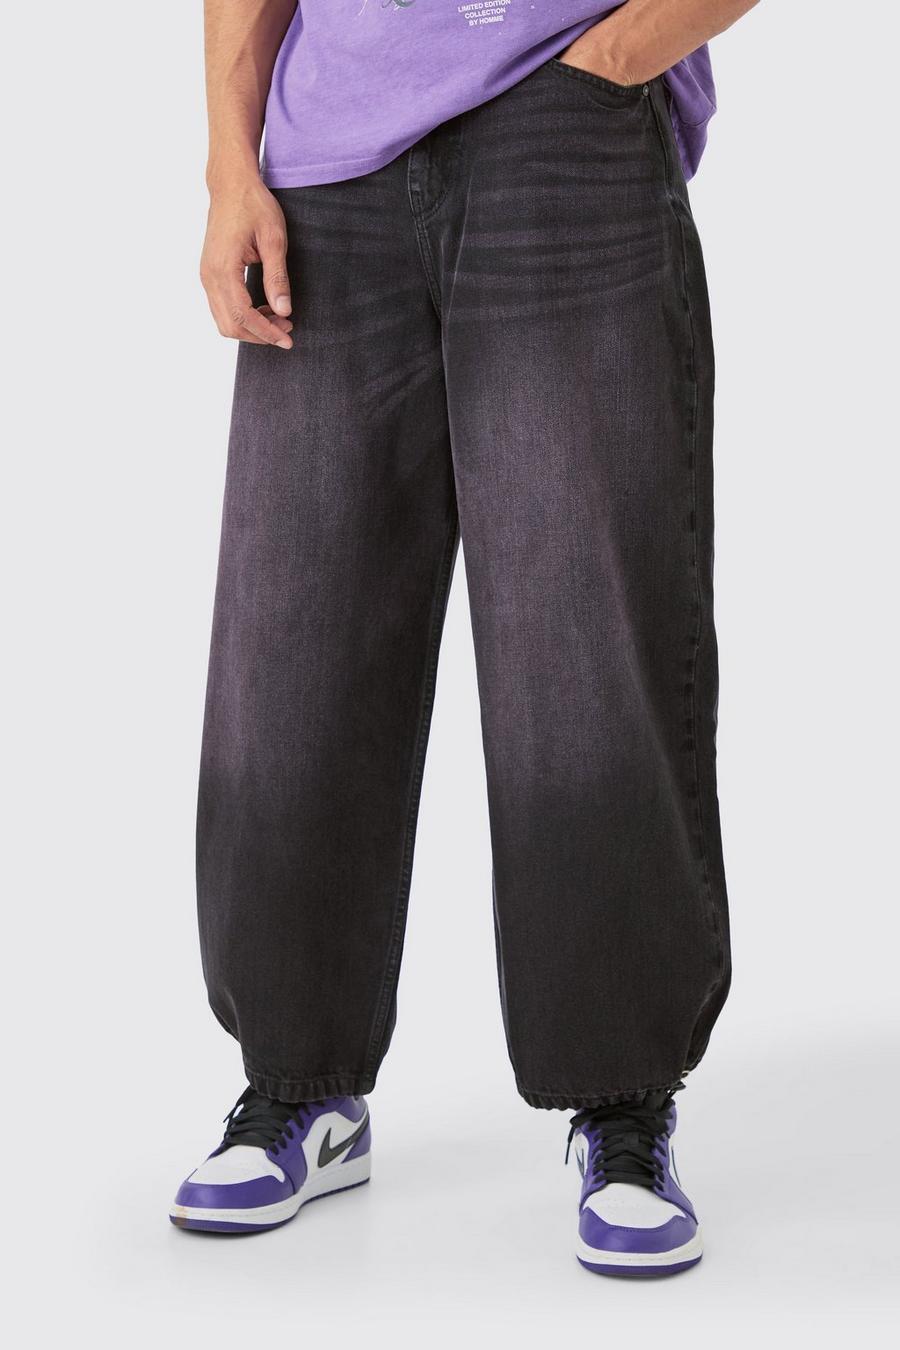 Schwarze Parachute Jeans mit Lila-Tönung, Purple